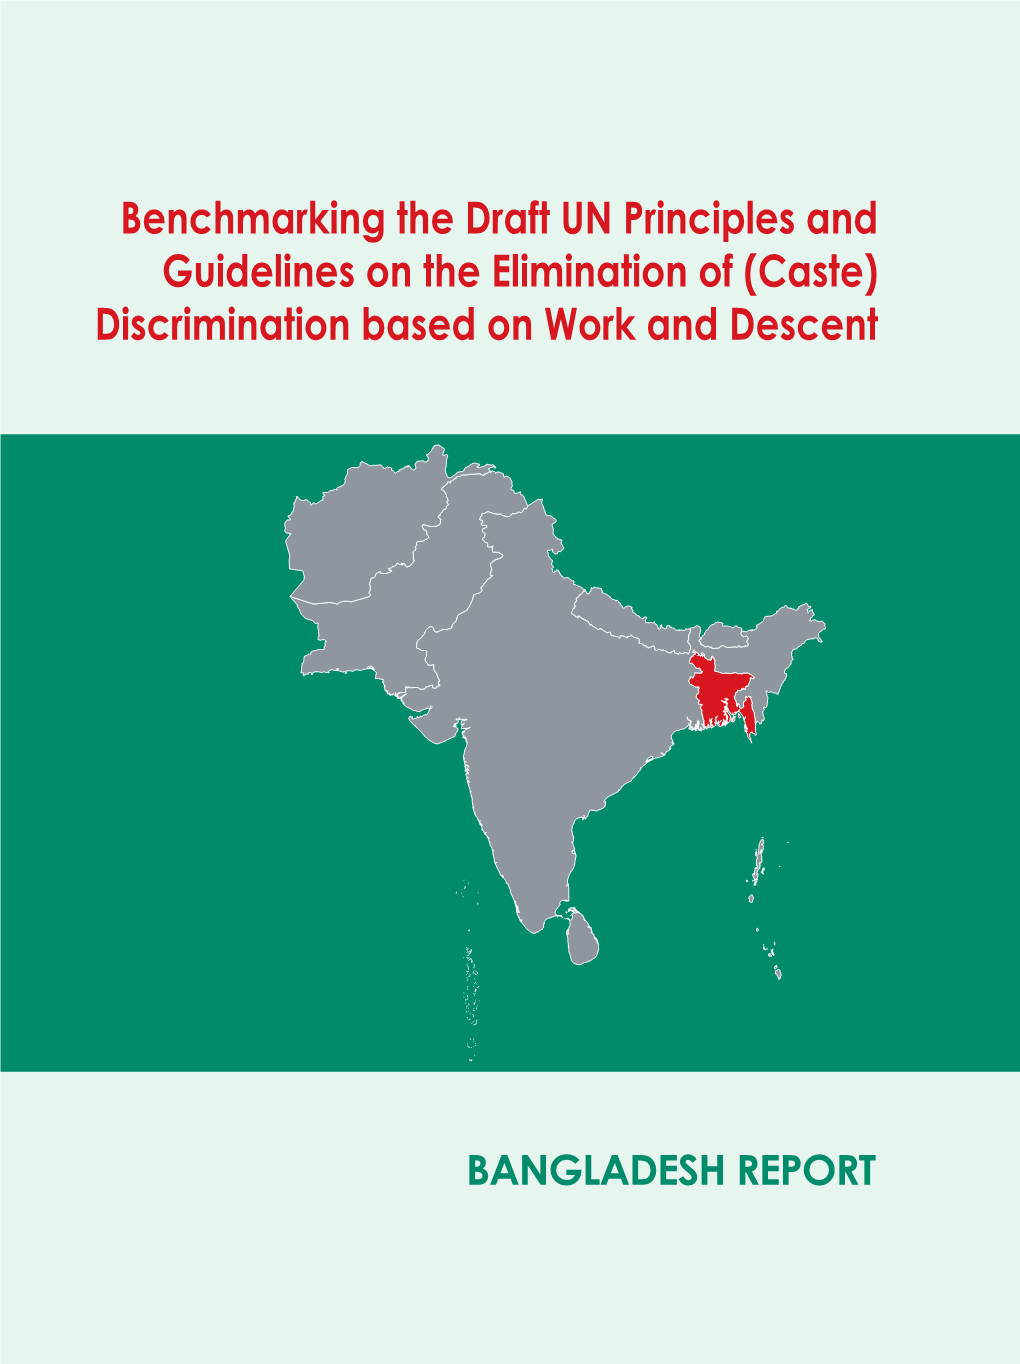 Bangladesh Report